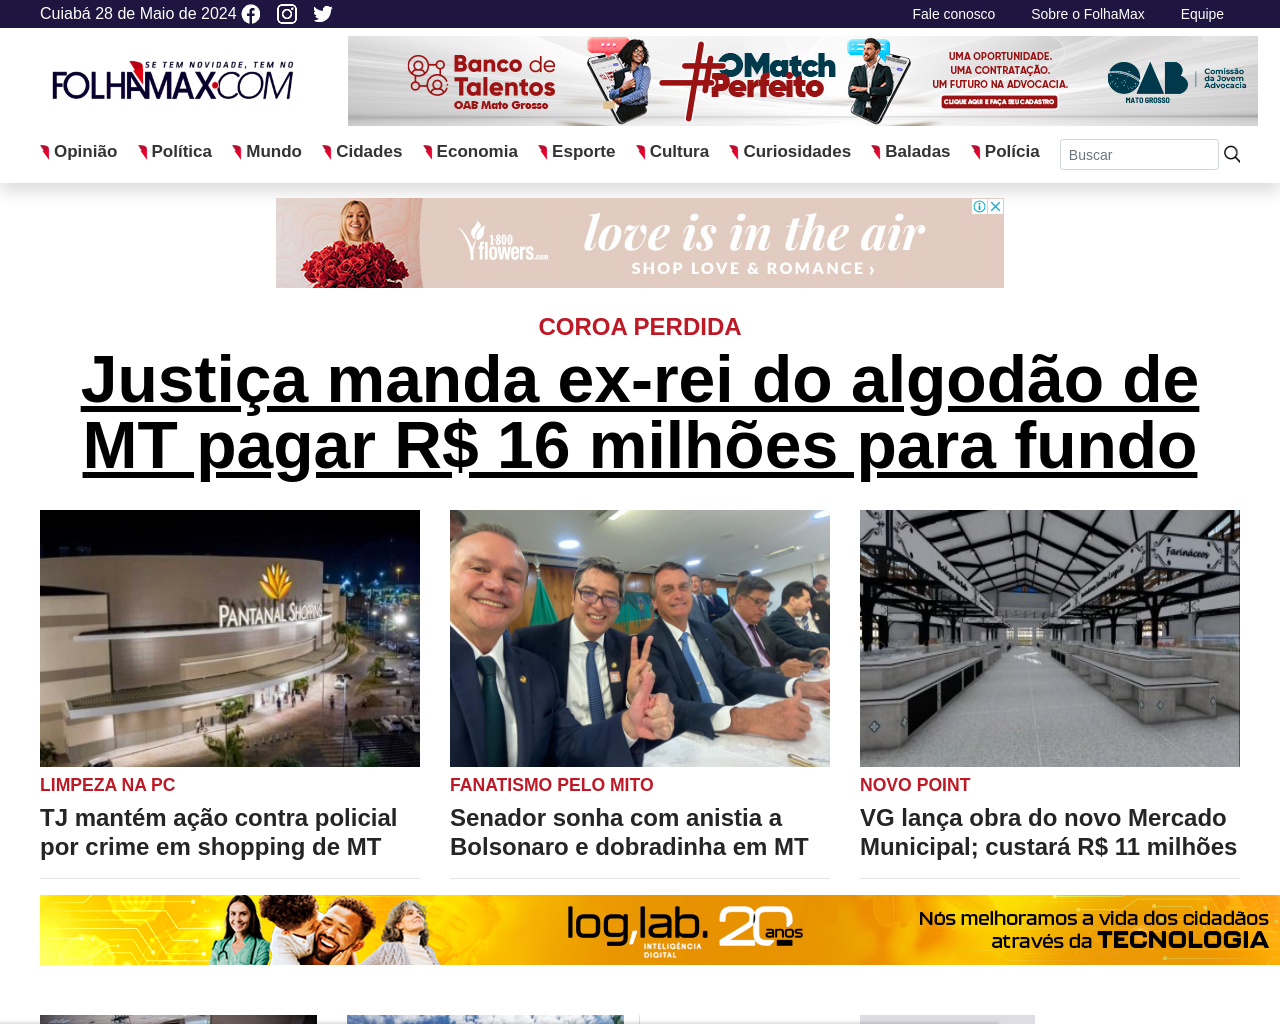 folhamax.com.br